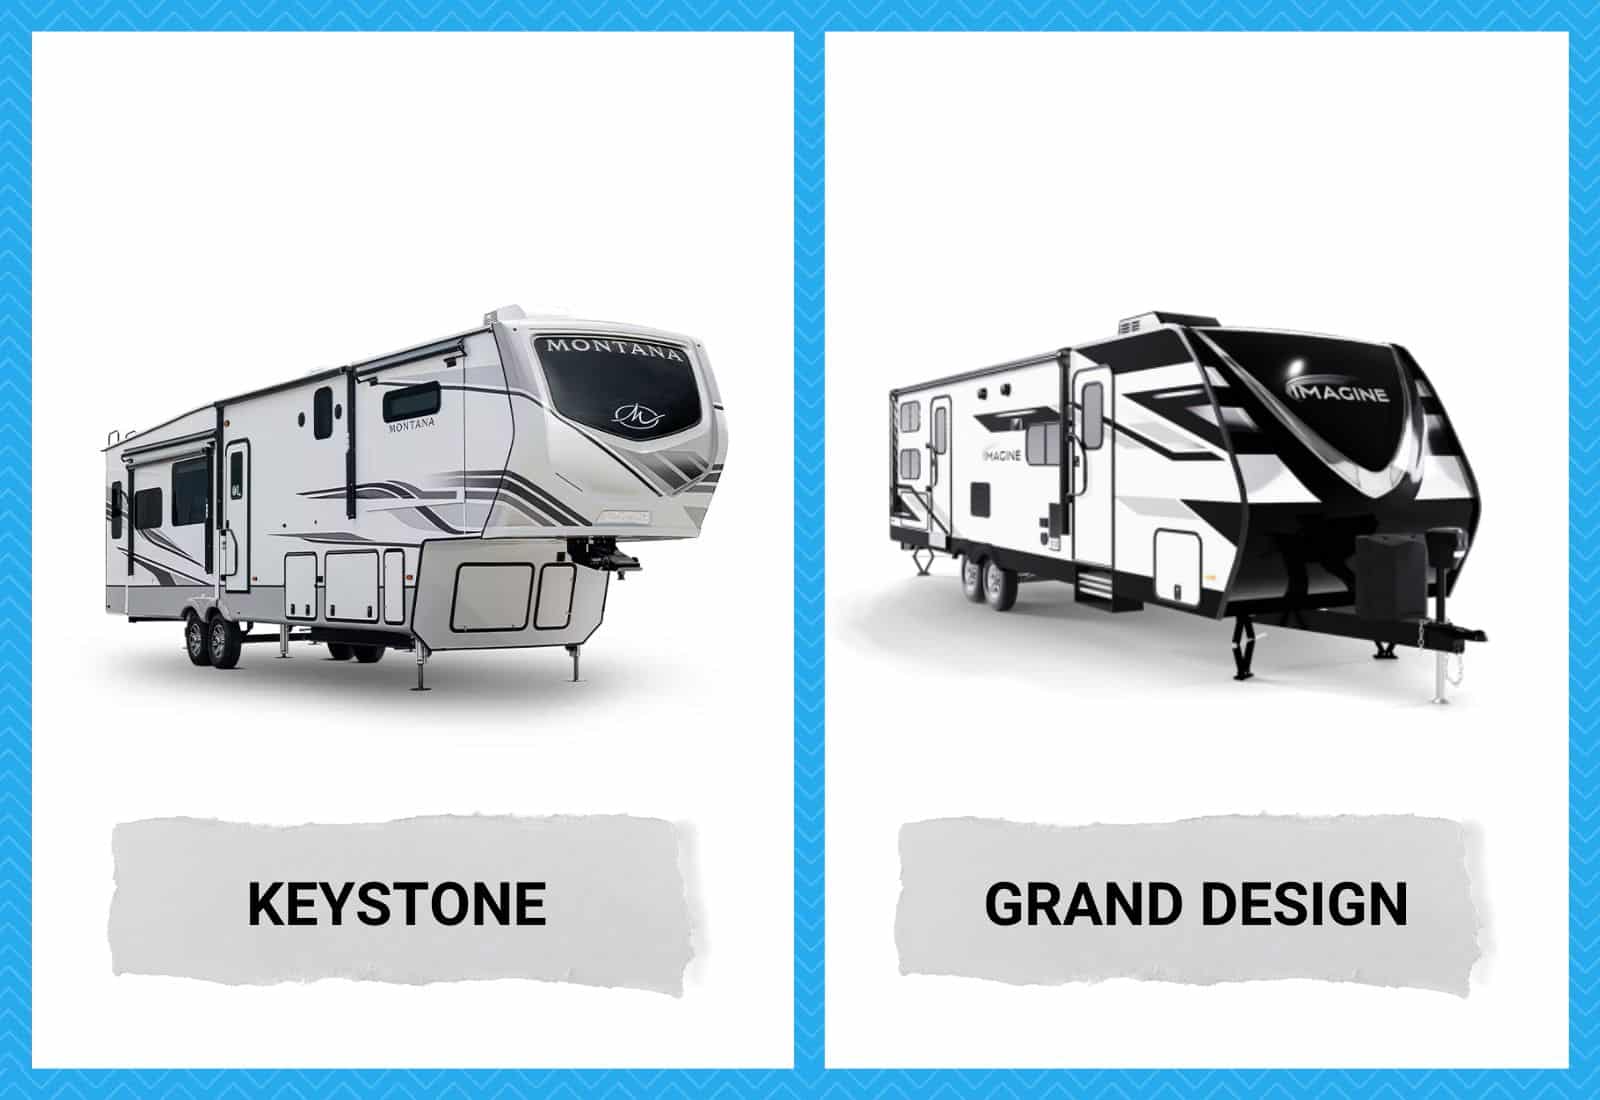 Keystone vs Grand Design